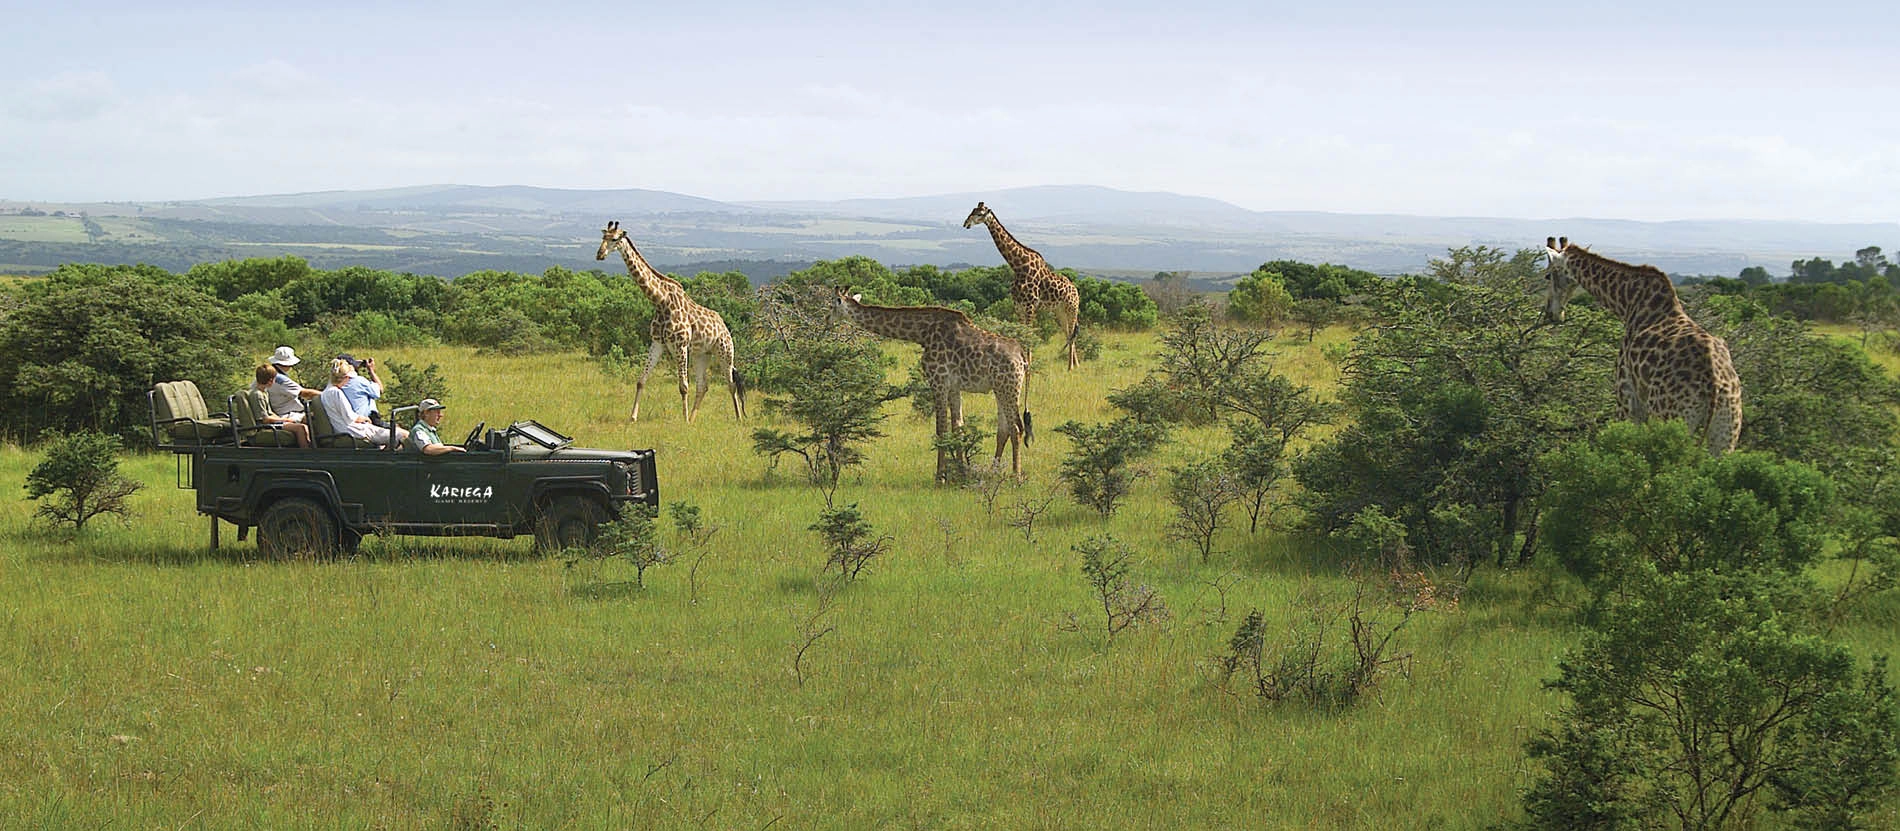 sydafrika_safari_kariega_jeep_banner